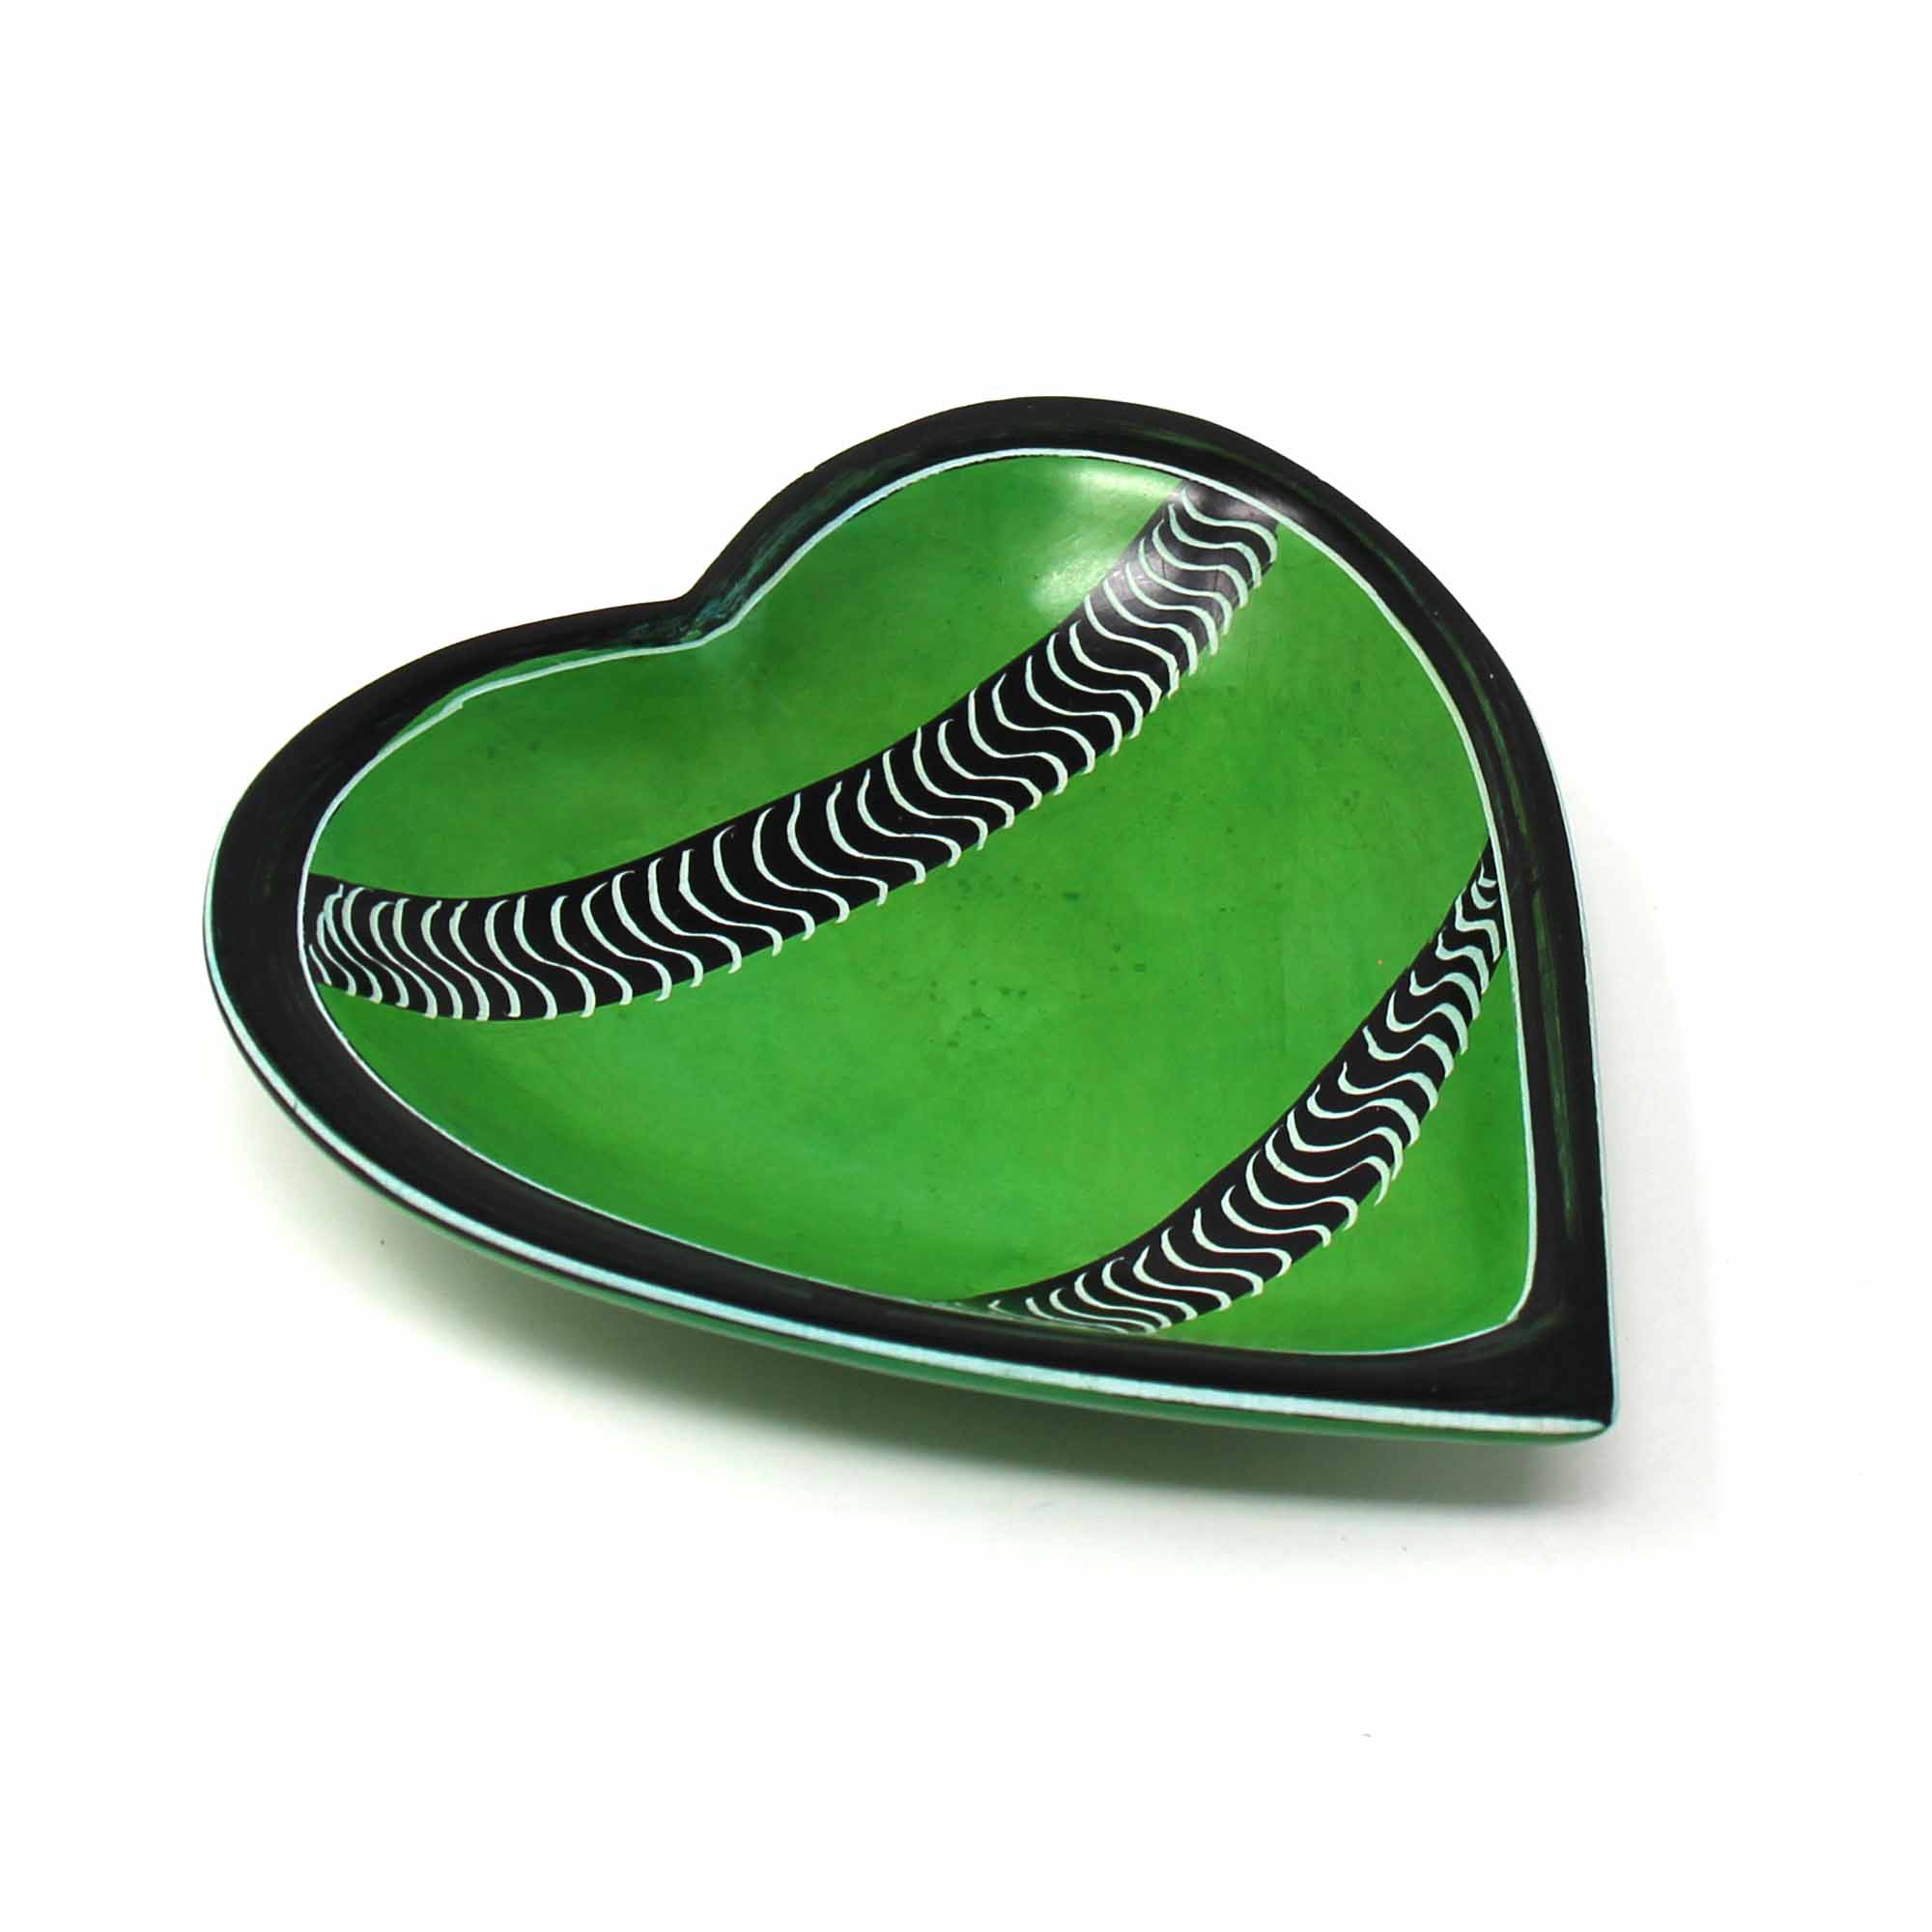 Soapstone Heart Bowl - Medium Green